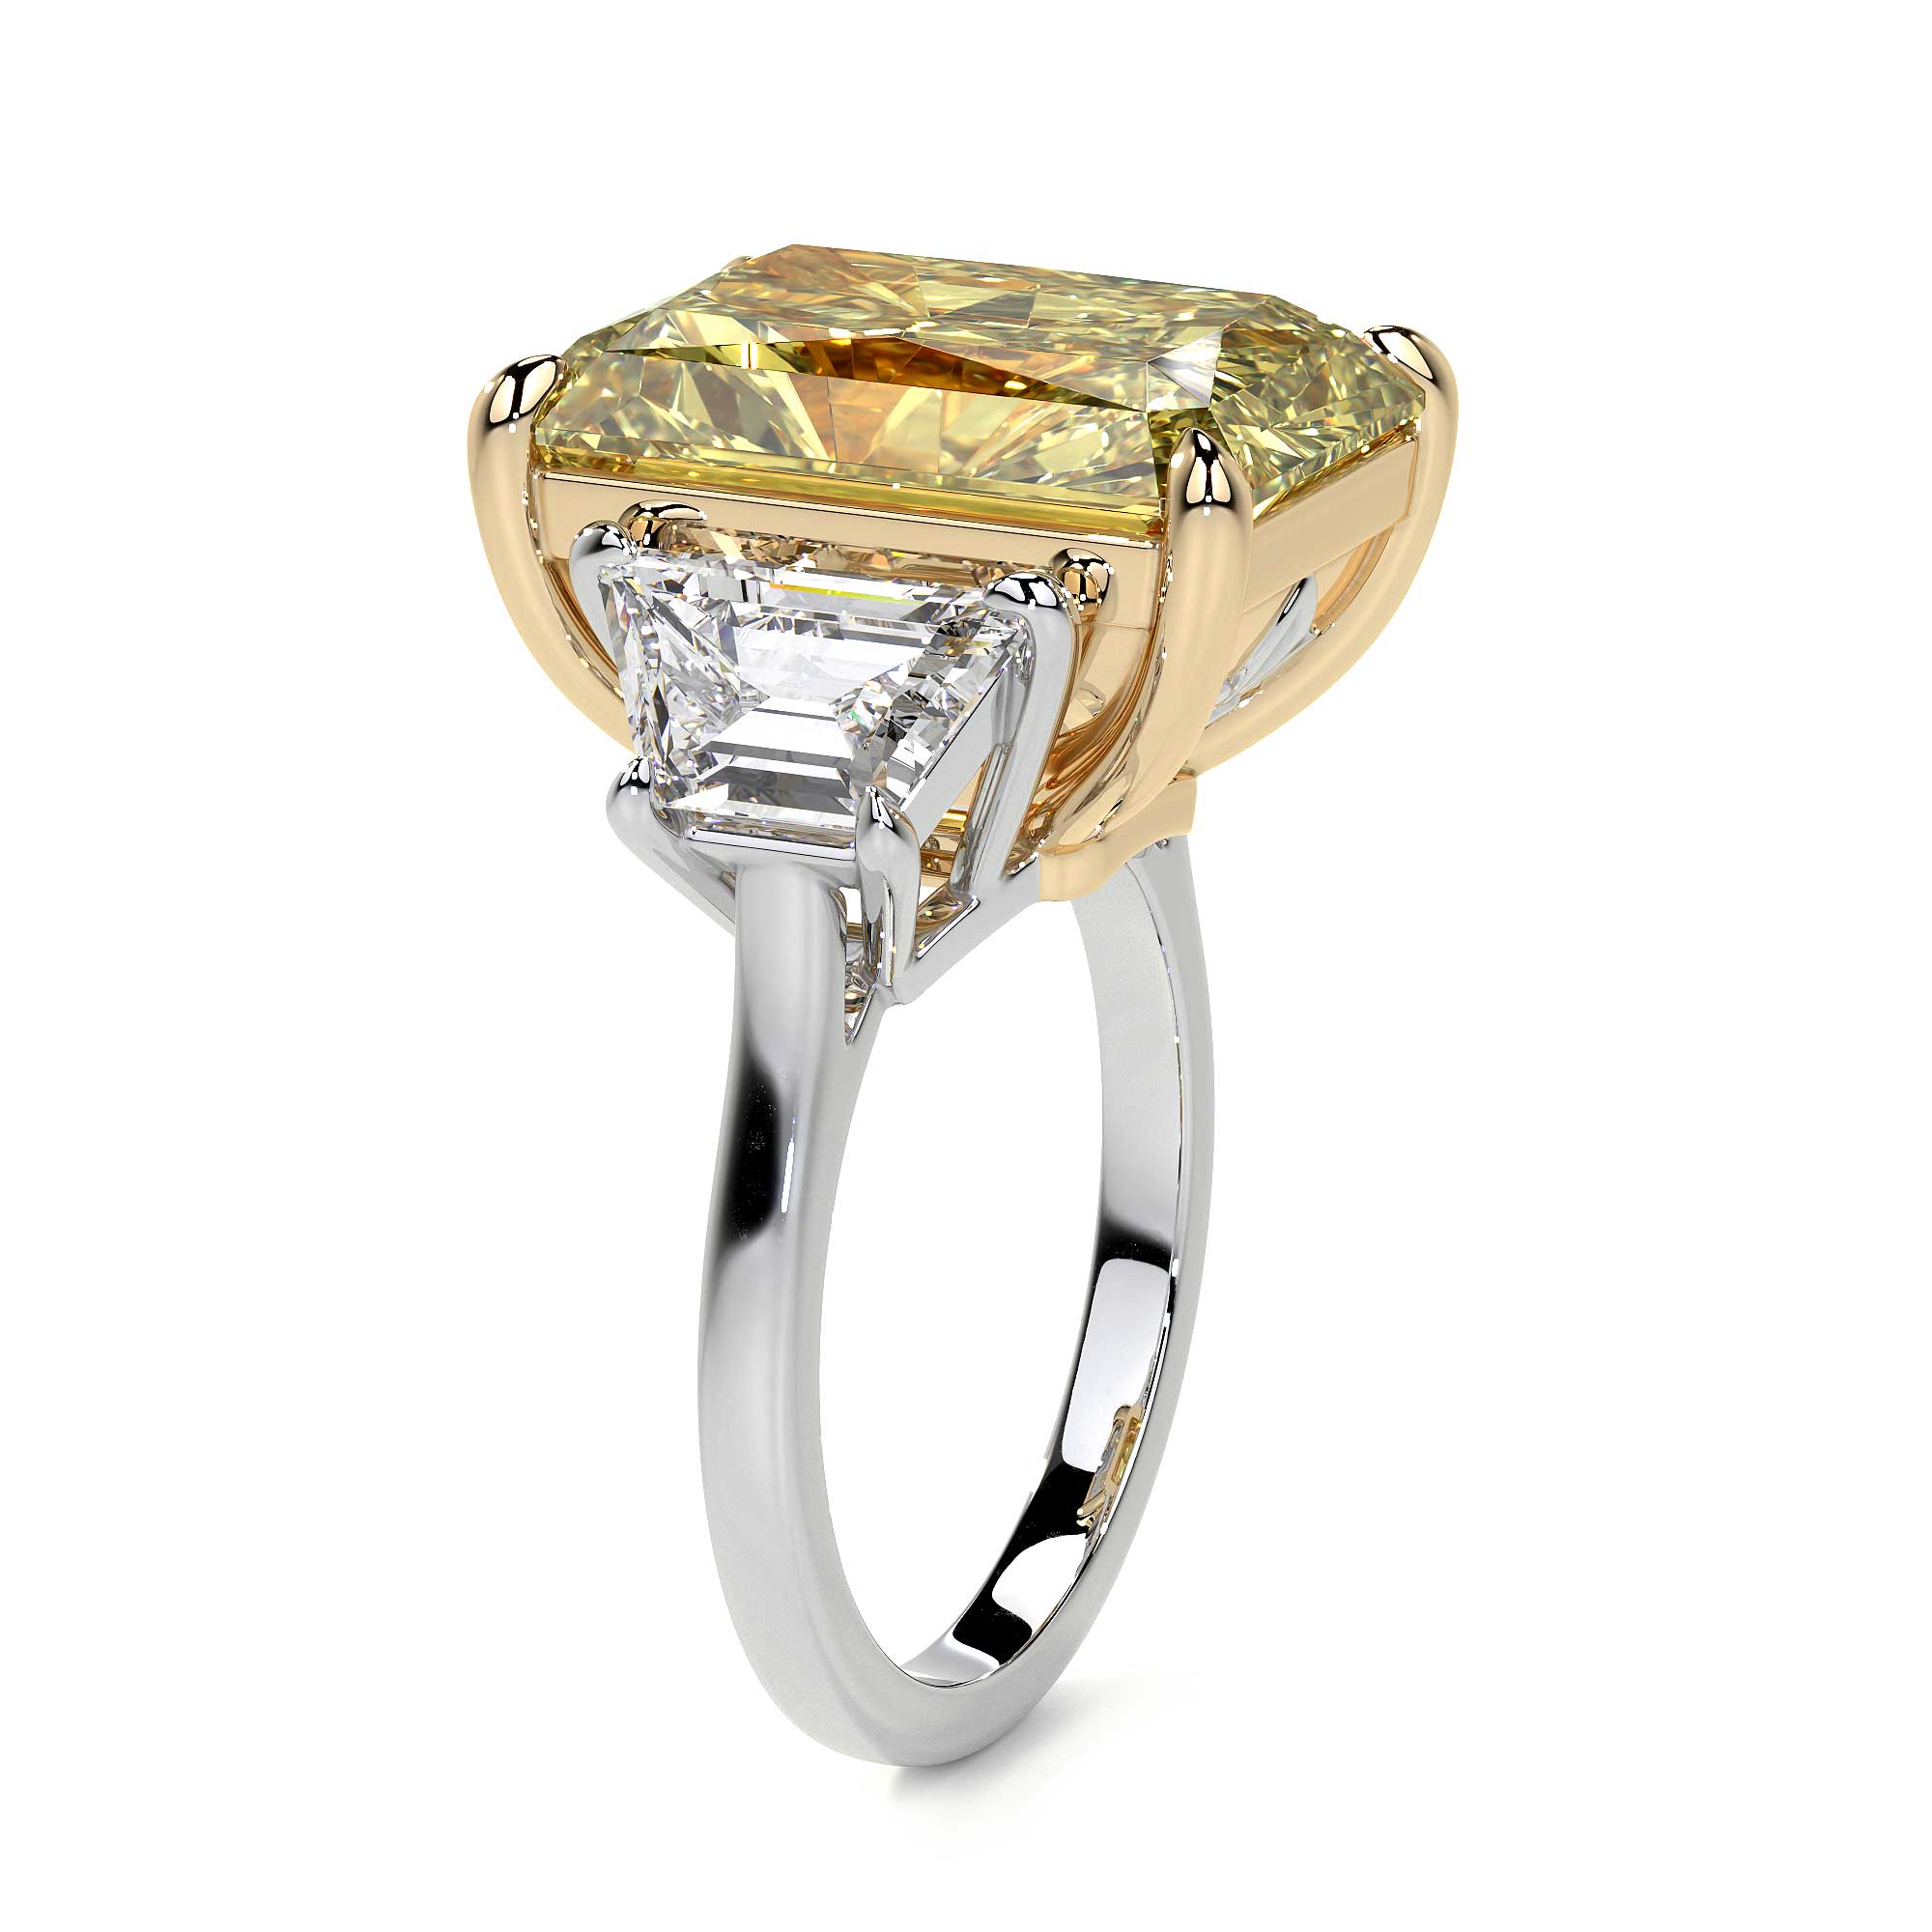 10 Carat Emerald Cut White Topaz Three Stone Wedding Ring 14K White Gold  Finish | eBay